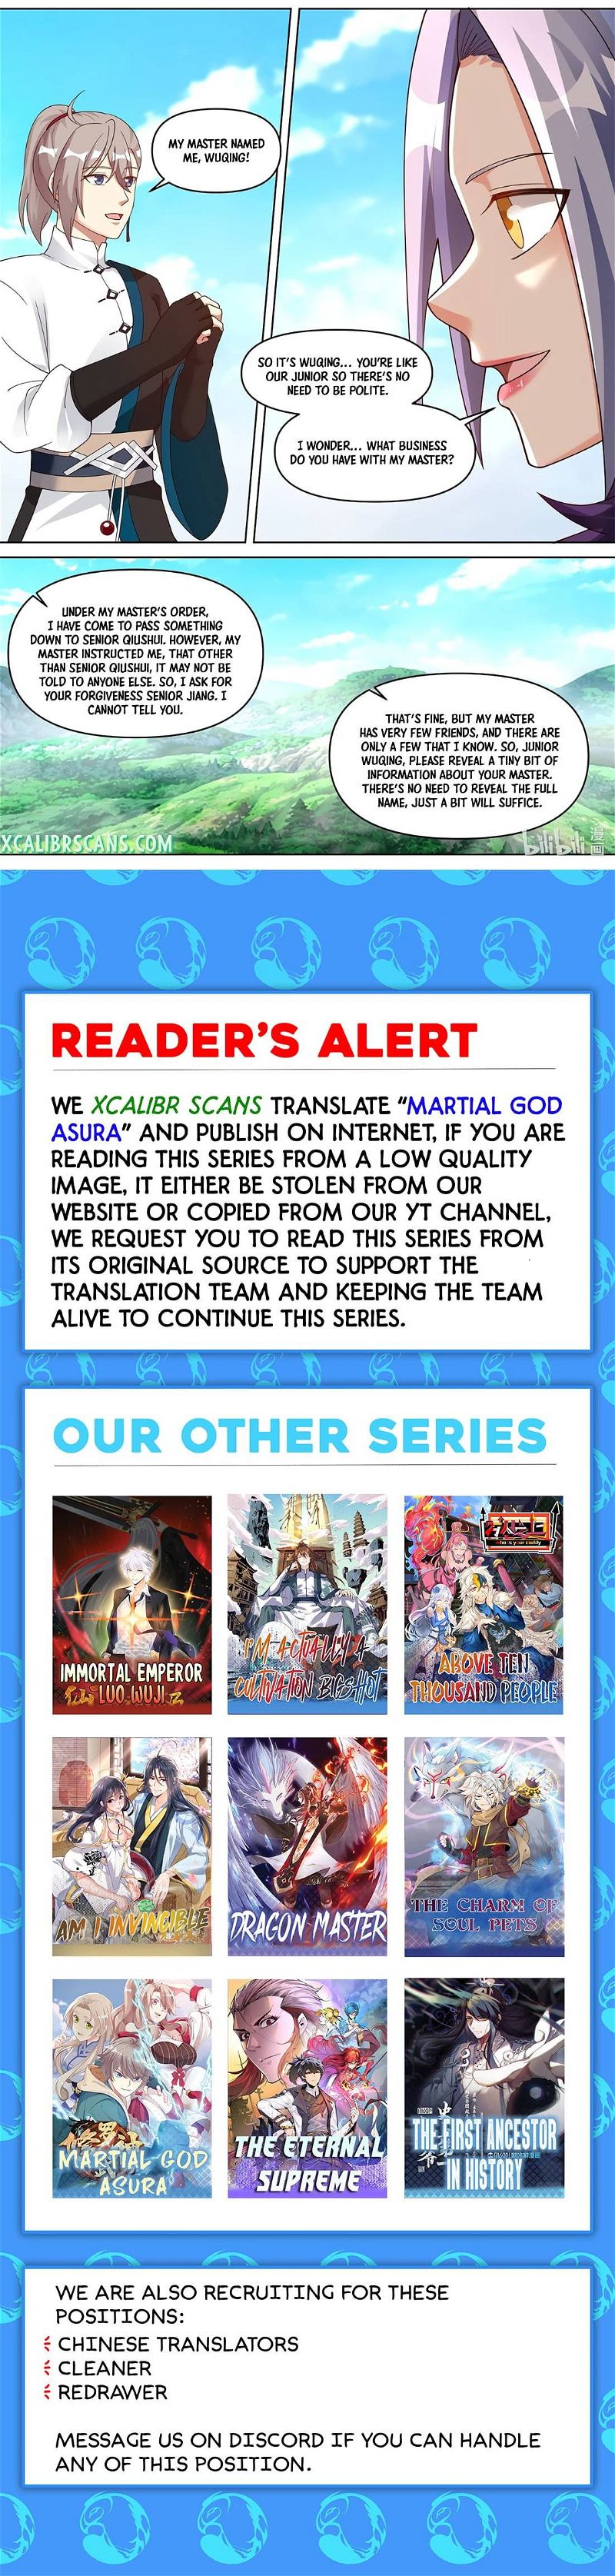 Martial God Asura Chapter 440 page 10